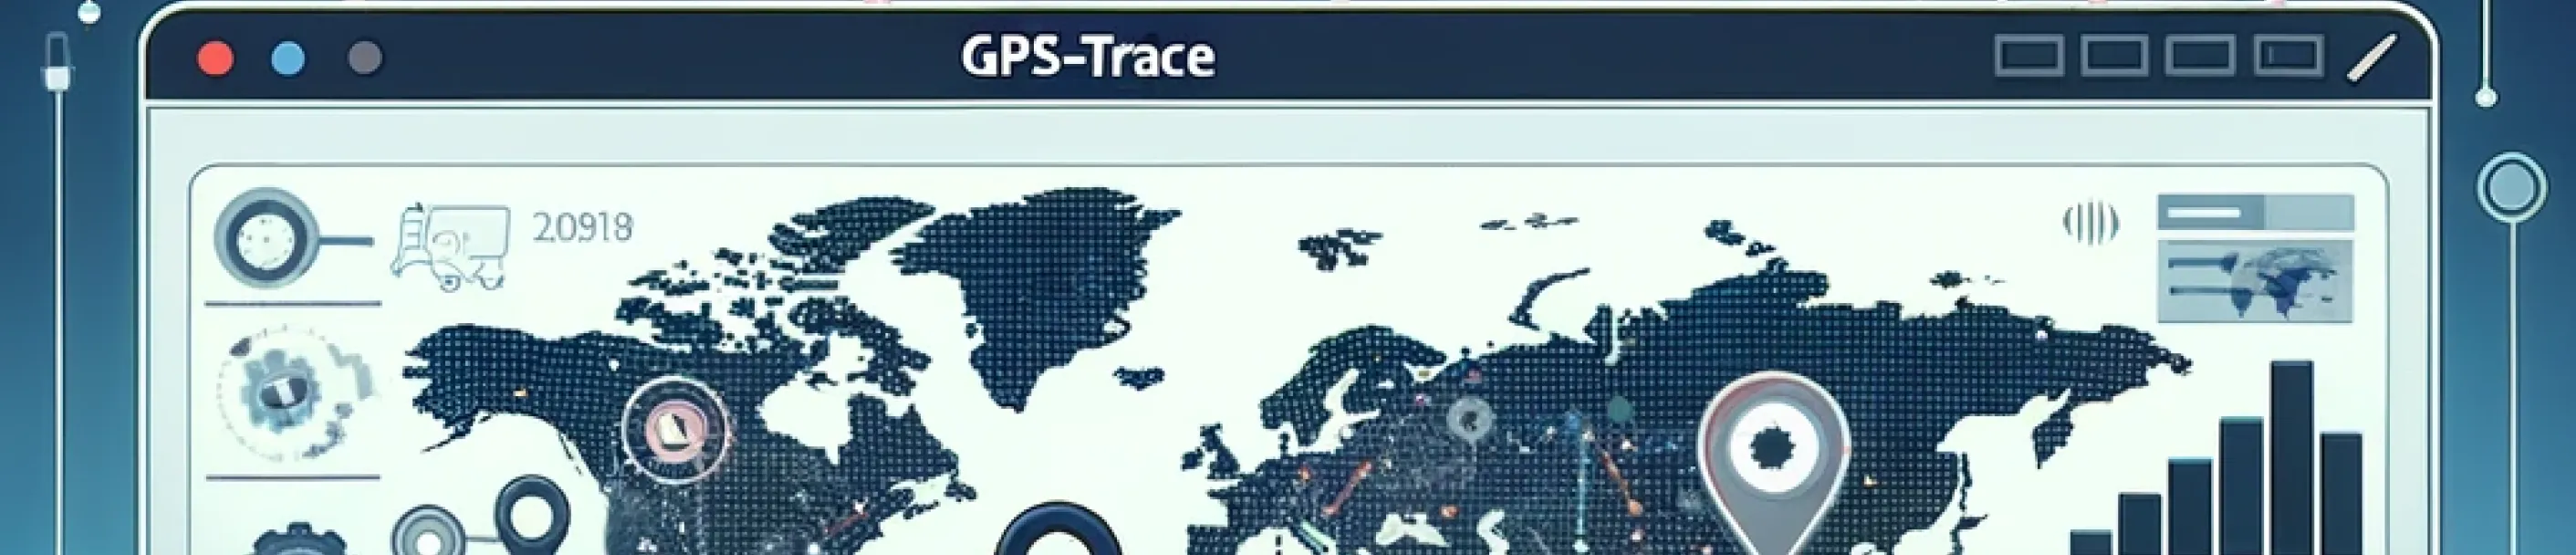 Sieć partnerska GPS-Trace